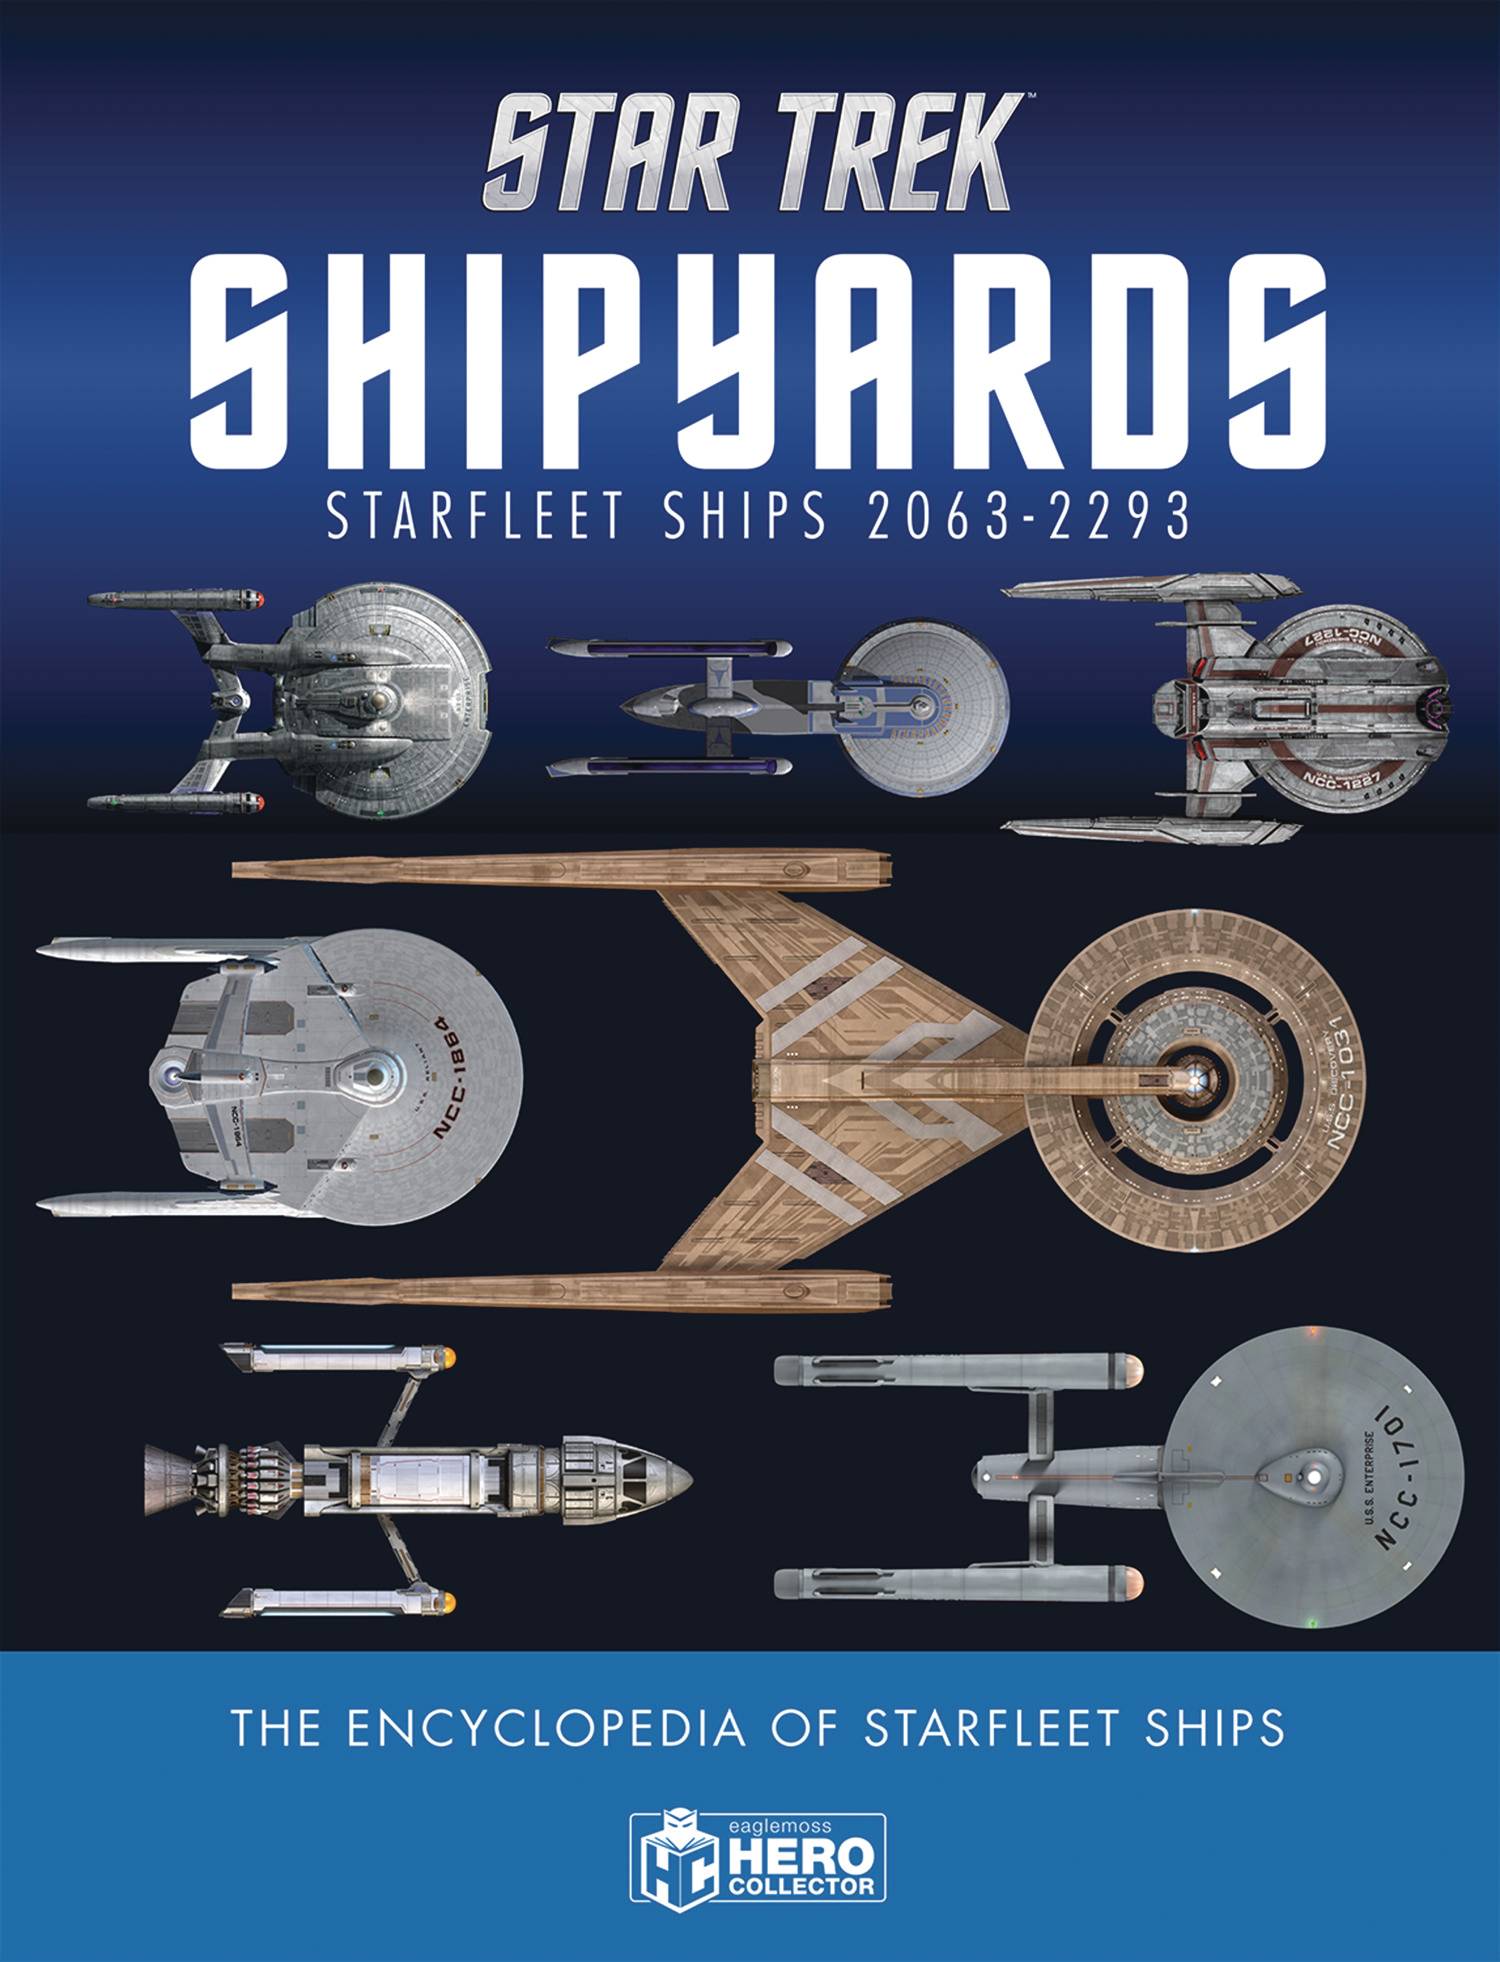 Star Trek Ency Starfleet #1 Starships 2151 - 2293 With Collectible